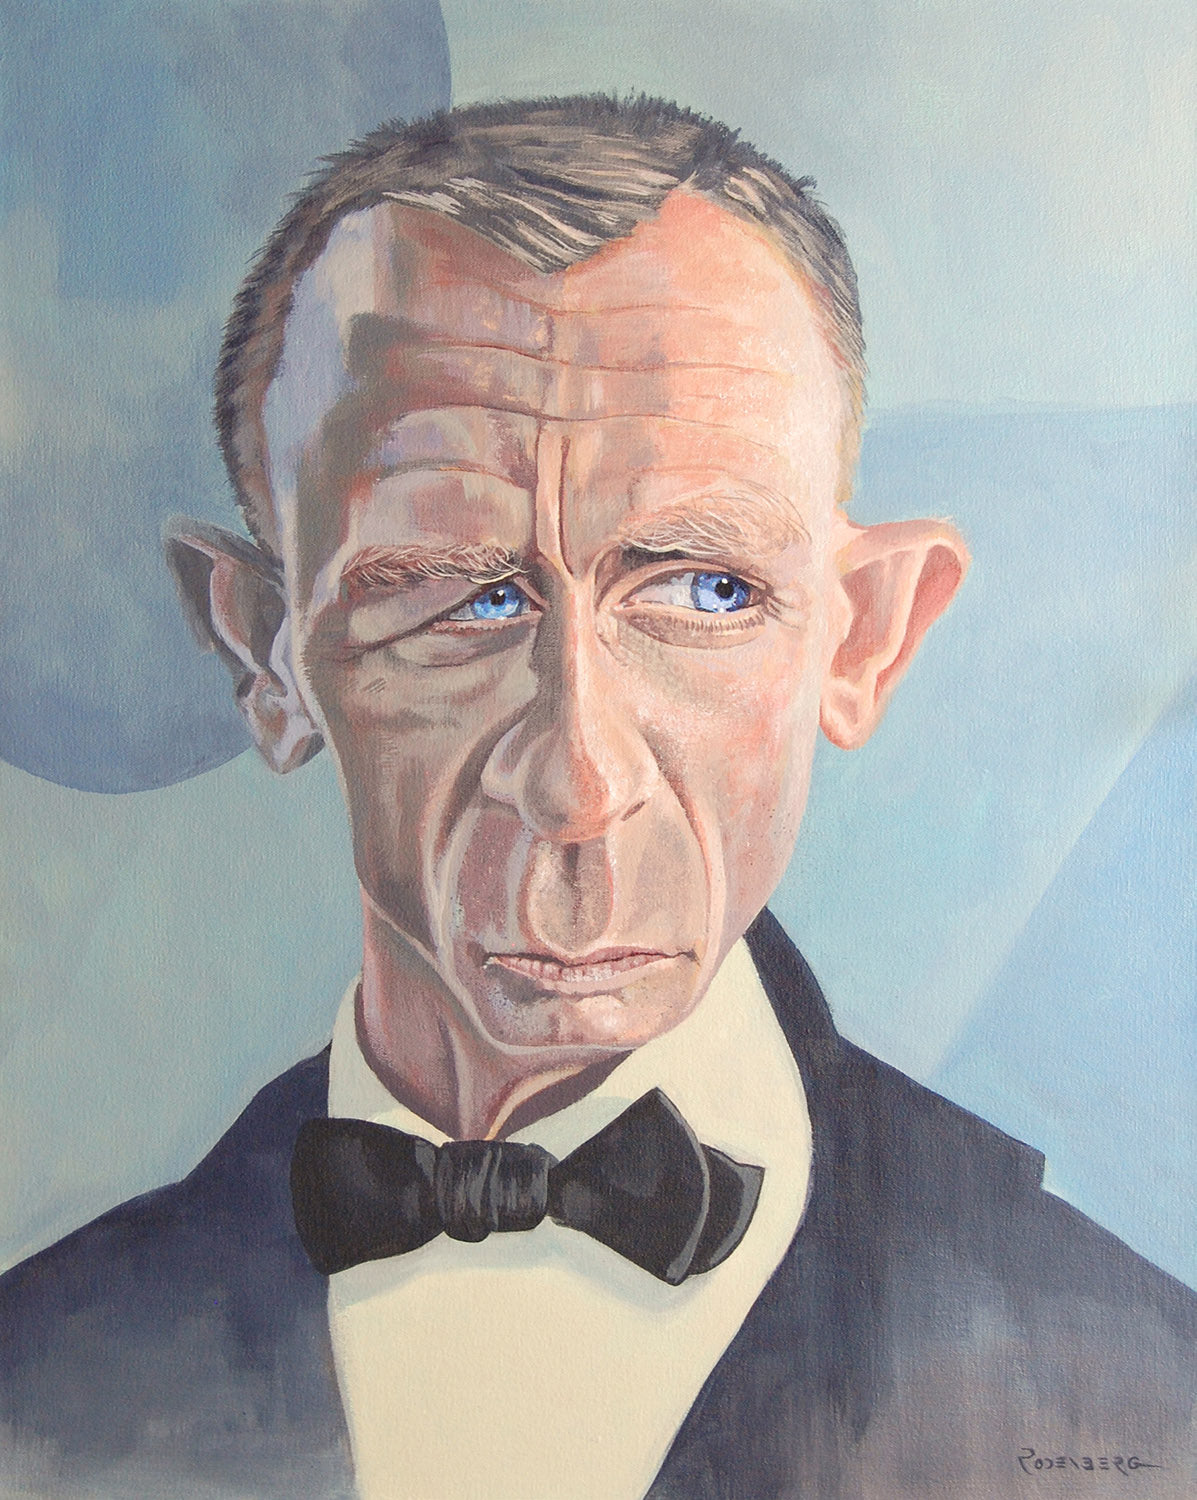 Daniel Craig 007 James Bond painting art by Jeff Rodenberg